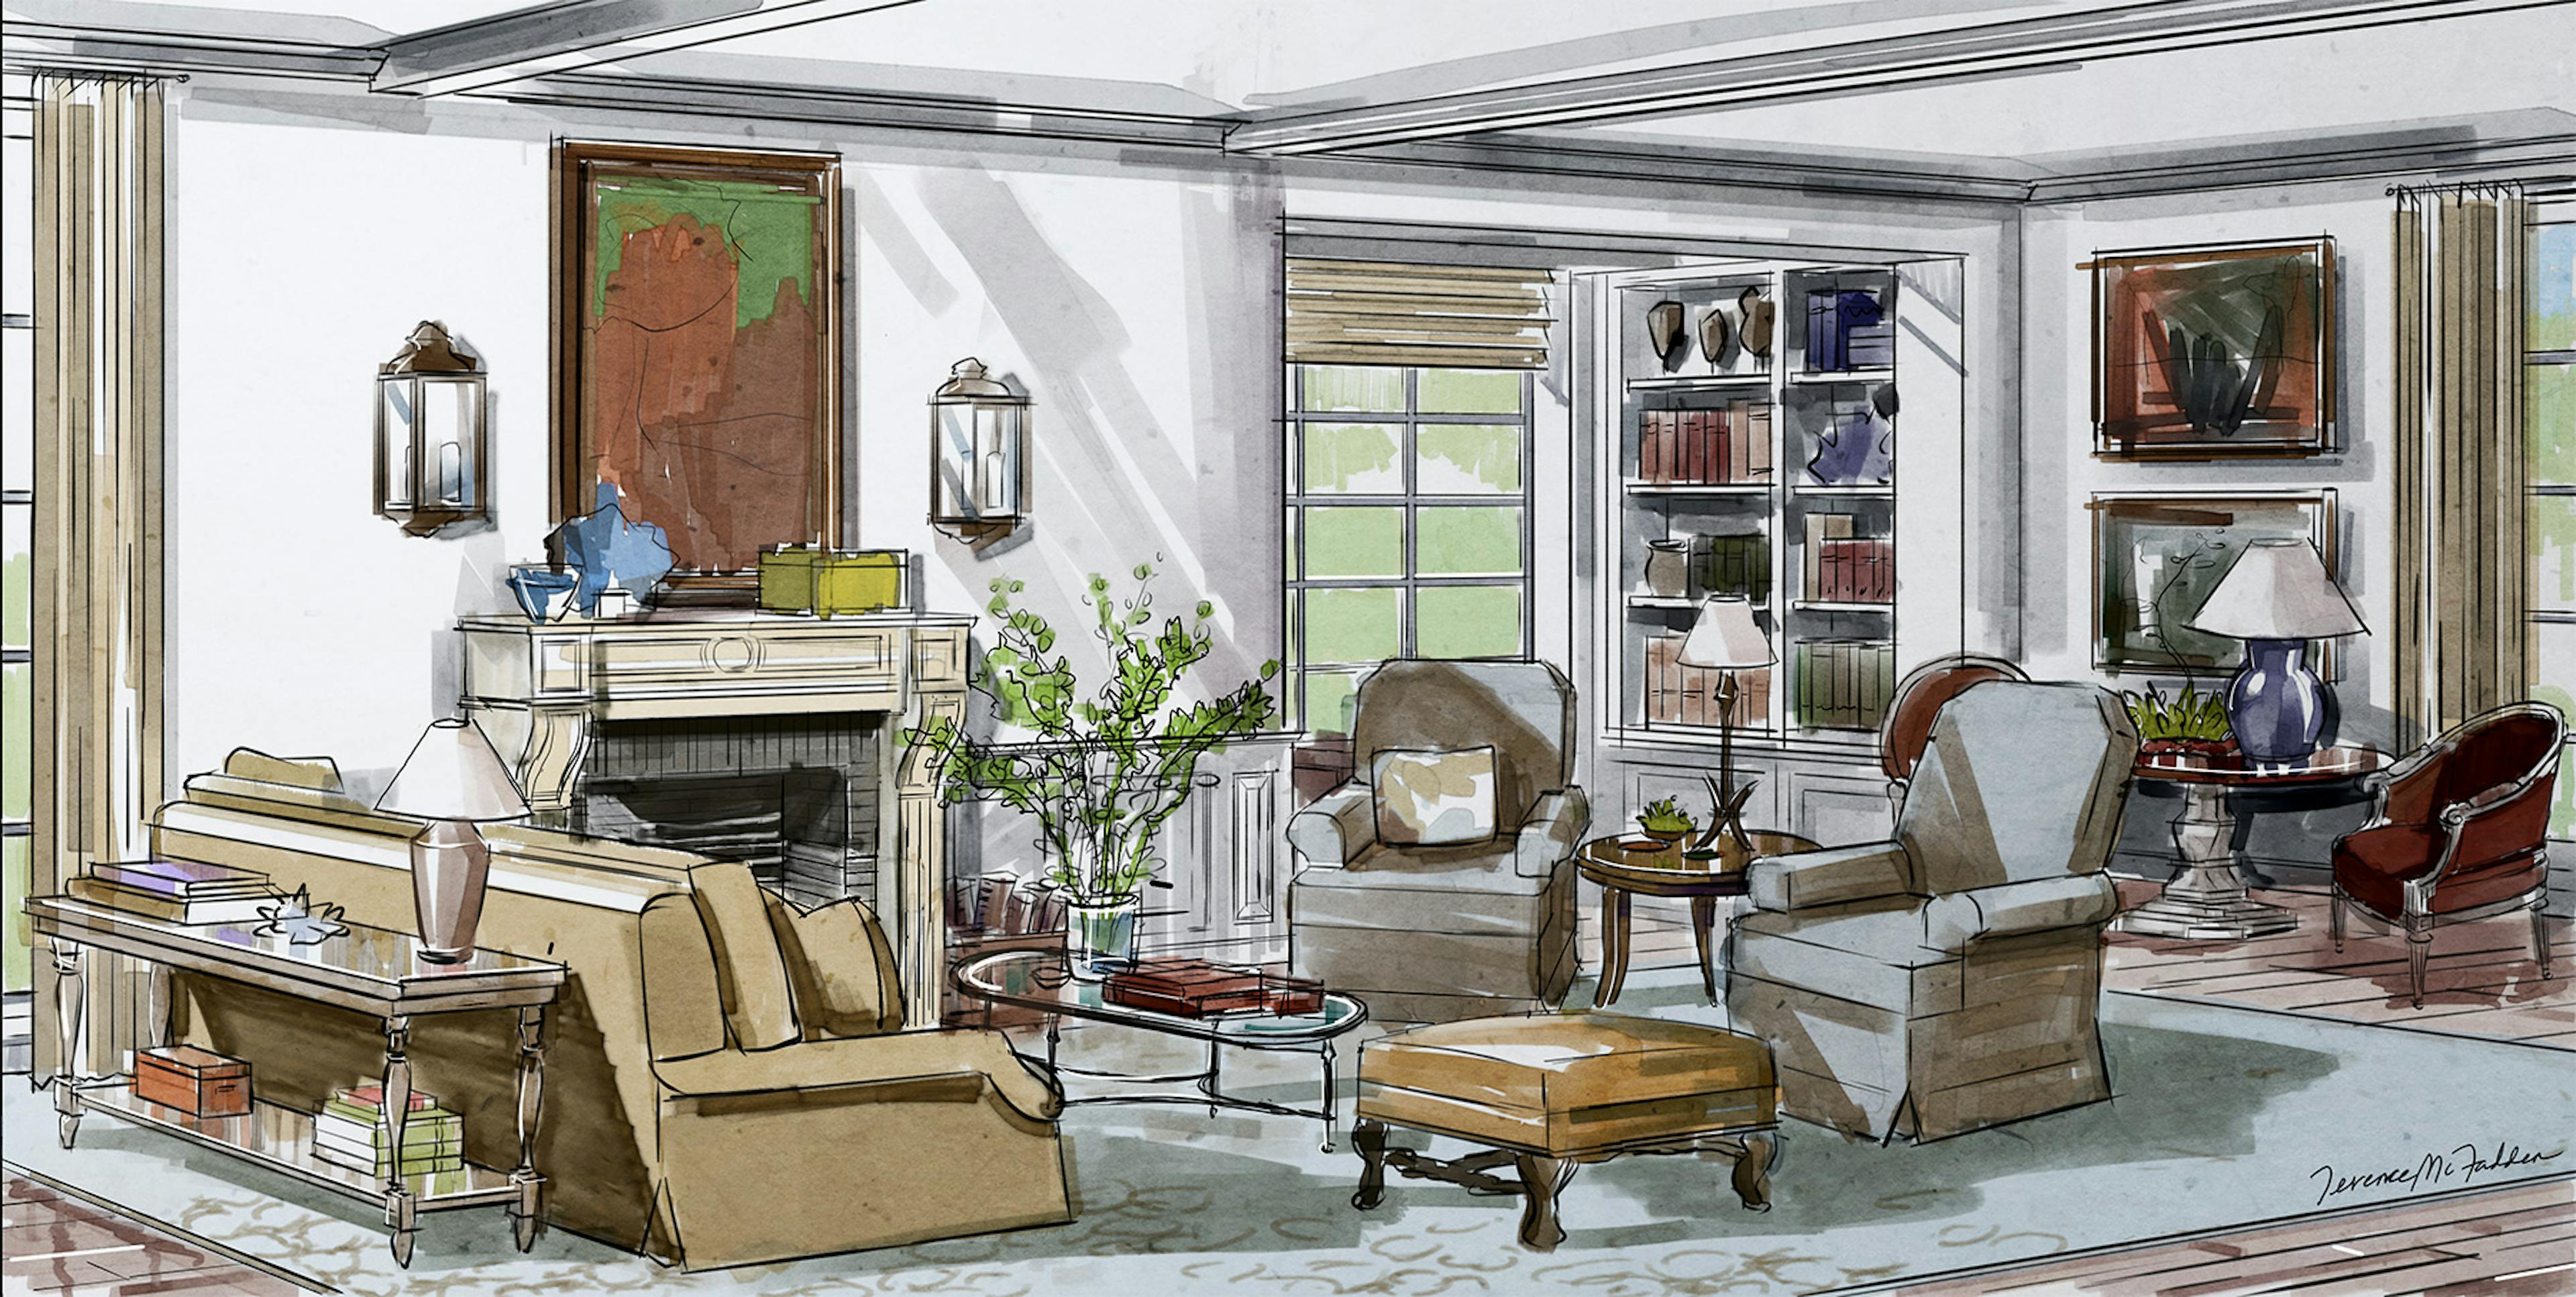 Concept sketch of a living room